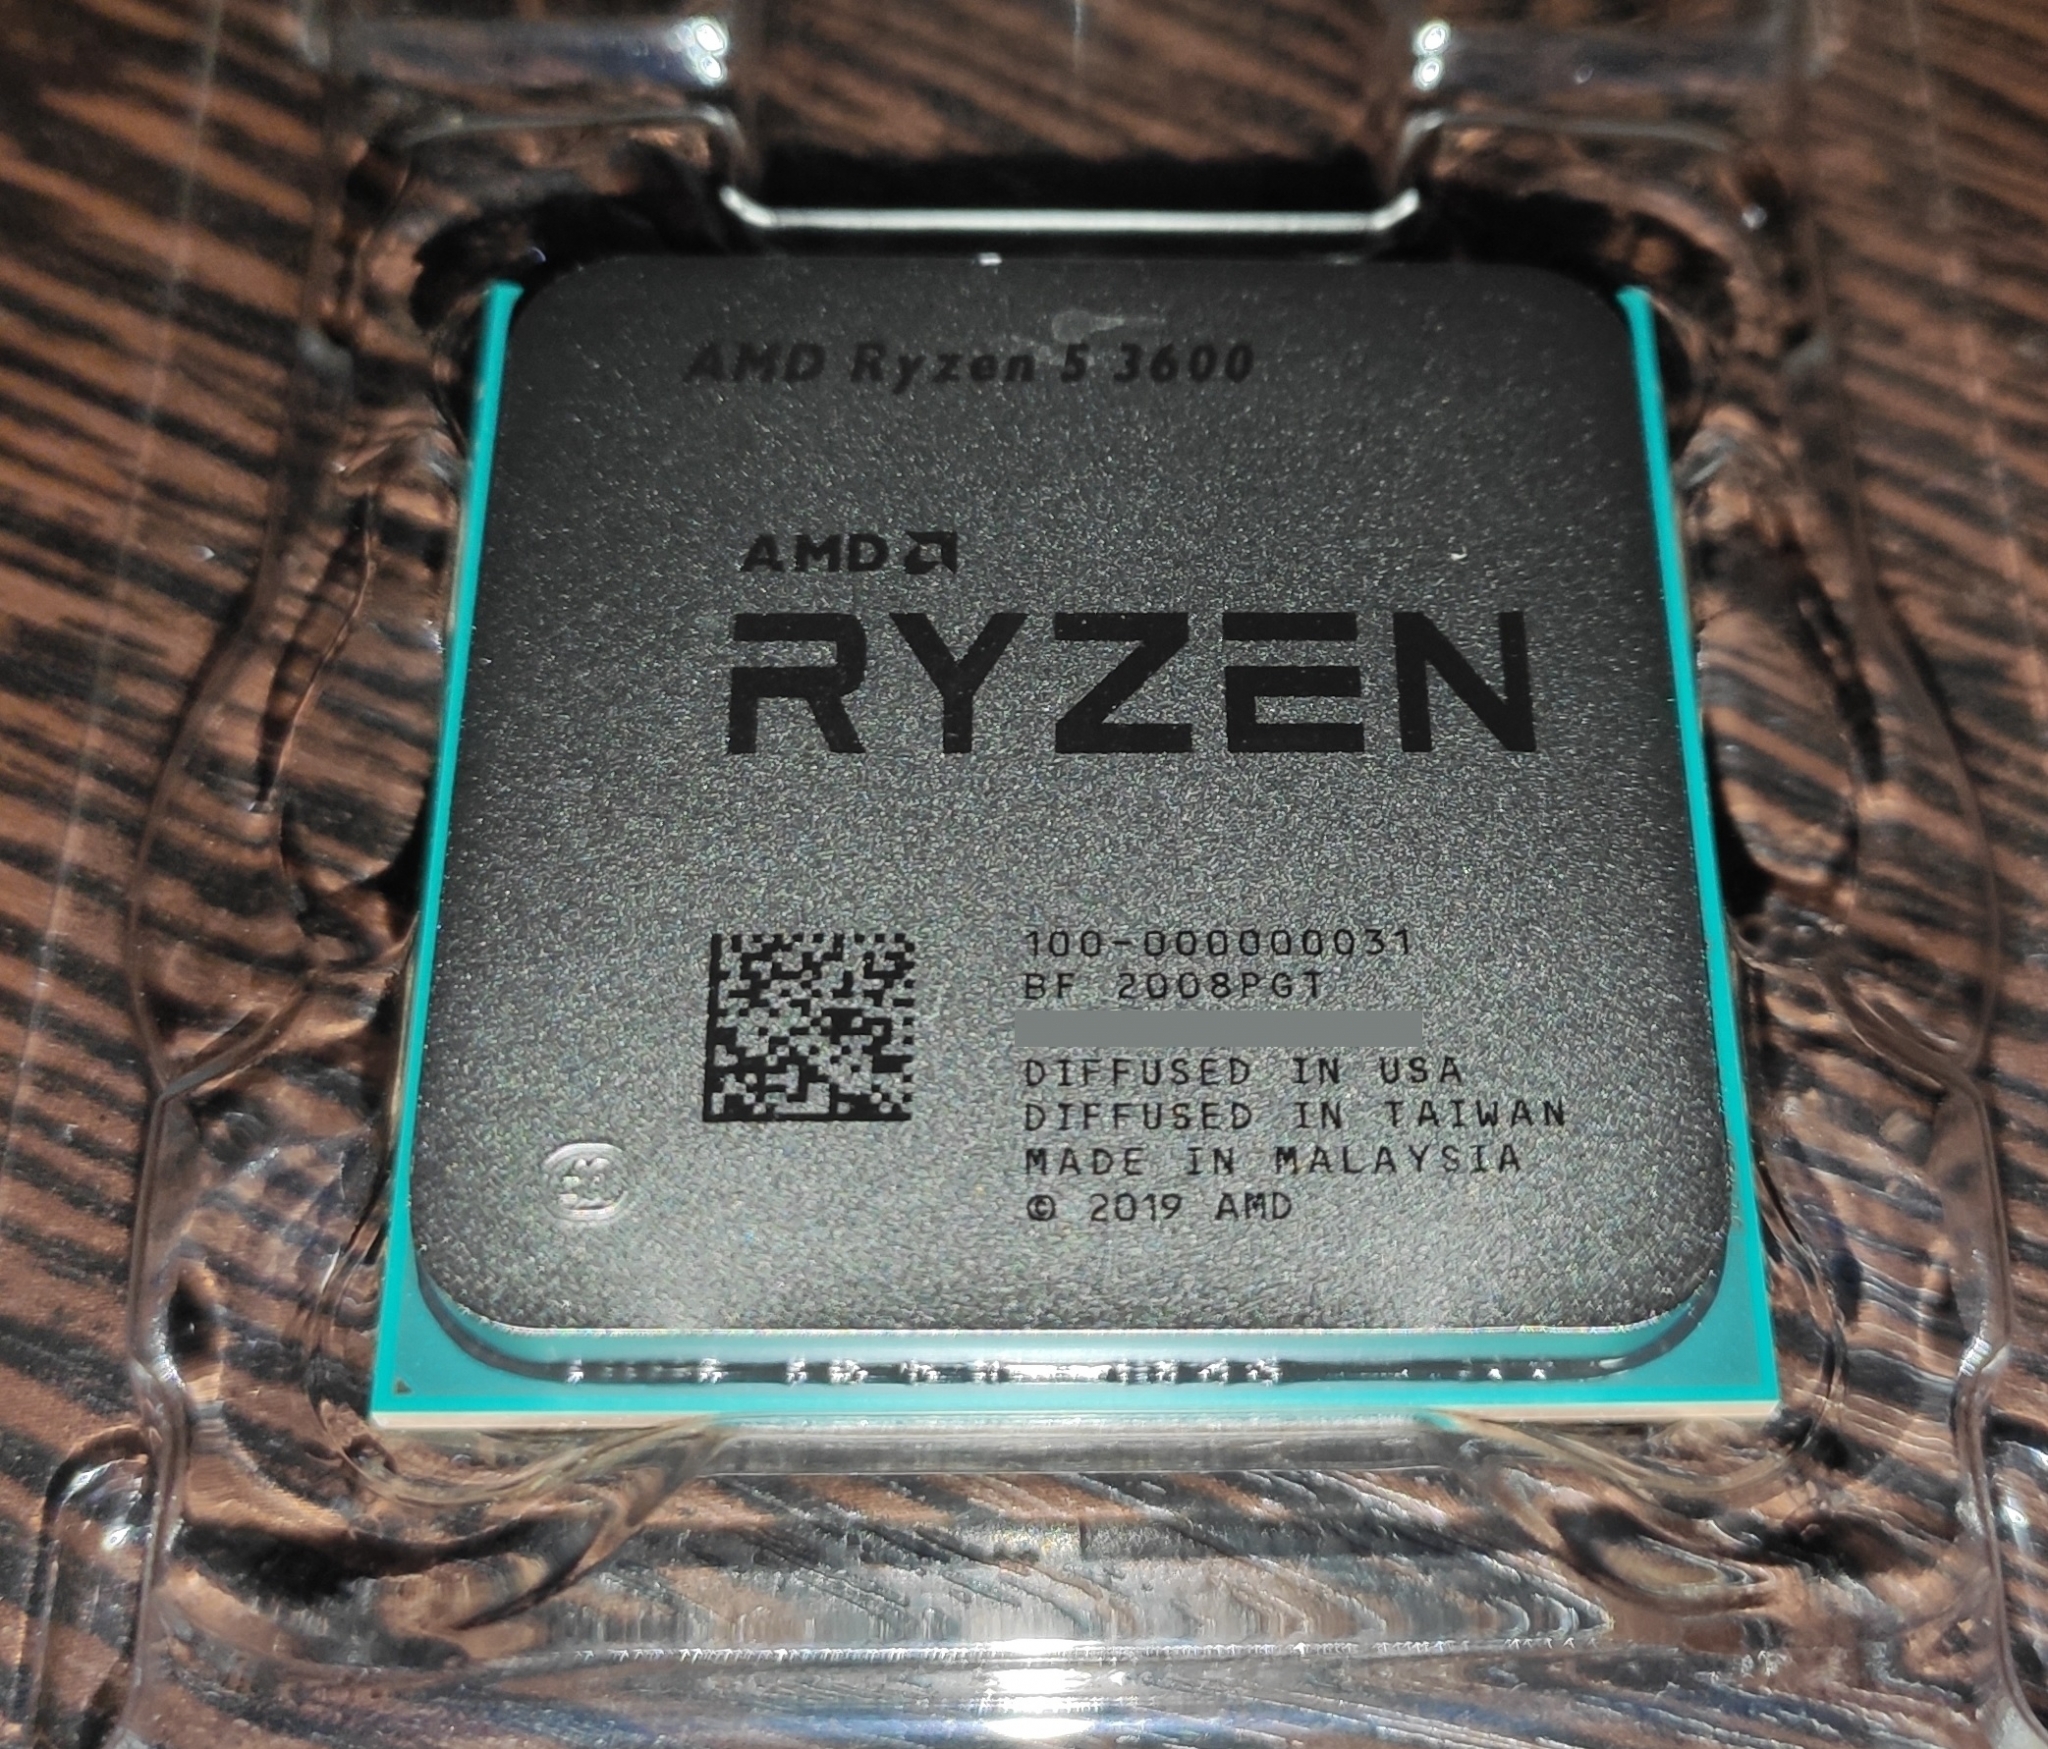 Ryzen 5 3600g. AMD Ryzen 5 3600 OEM. Процессор AMD Ryzen 5 3600 am4 OEM. Процессор AMD Ryazan 5 3600 Box. AMD Ryzen 5 5600g OEM.